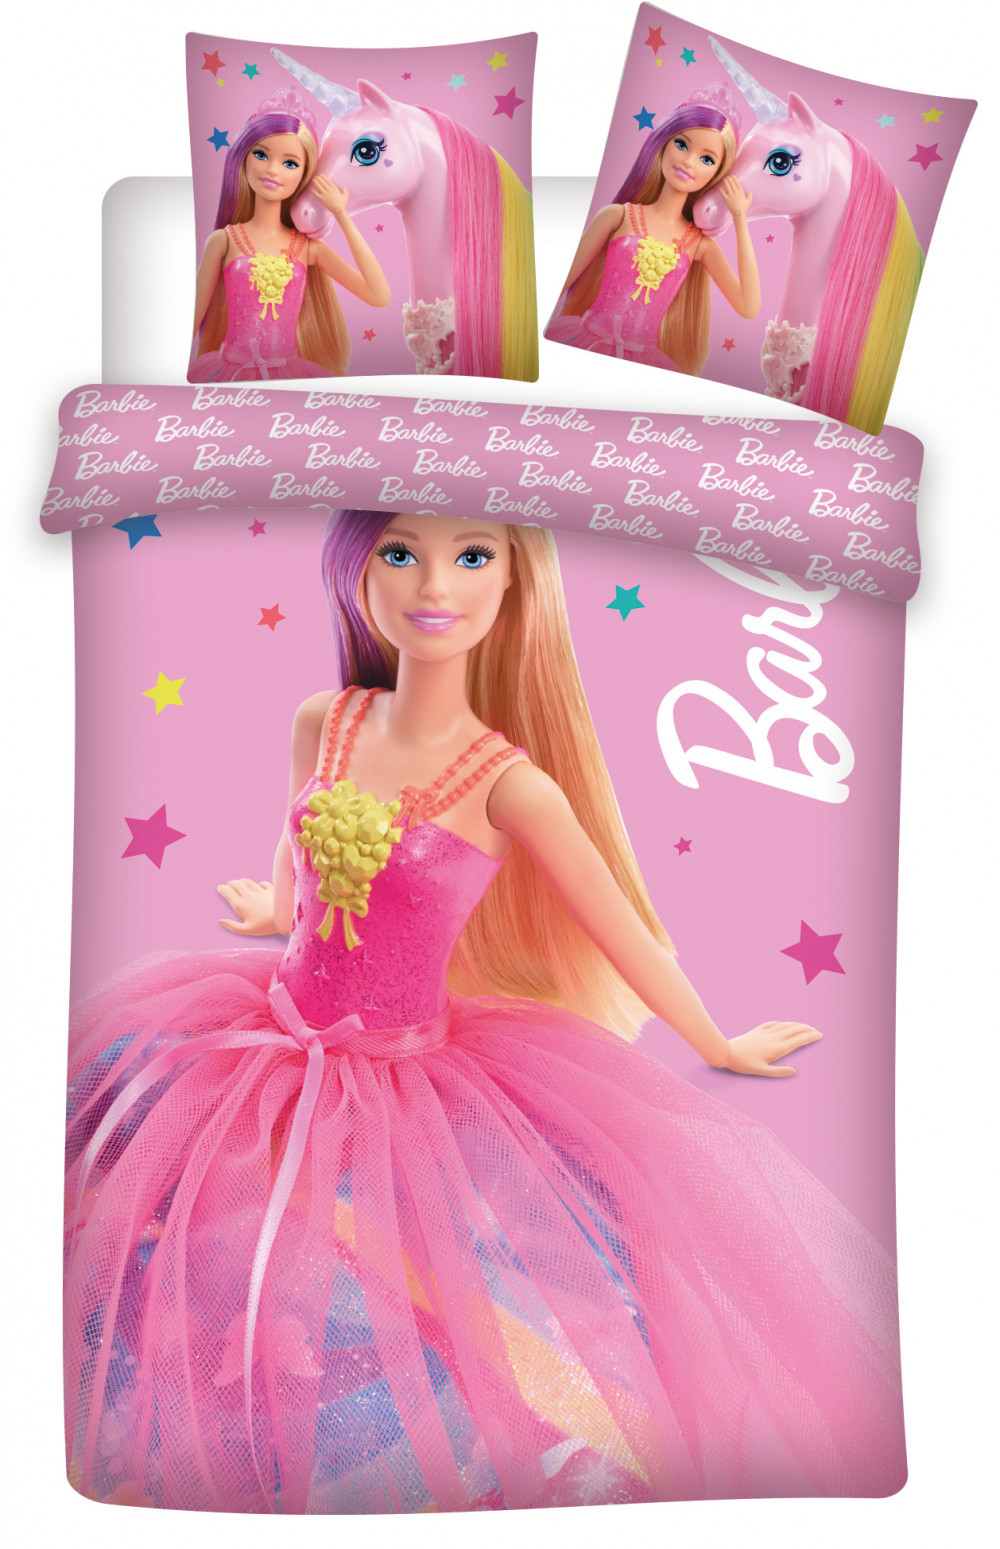 Barbie ovis ágyneműhuzat garnitúra 100x140